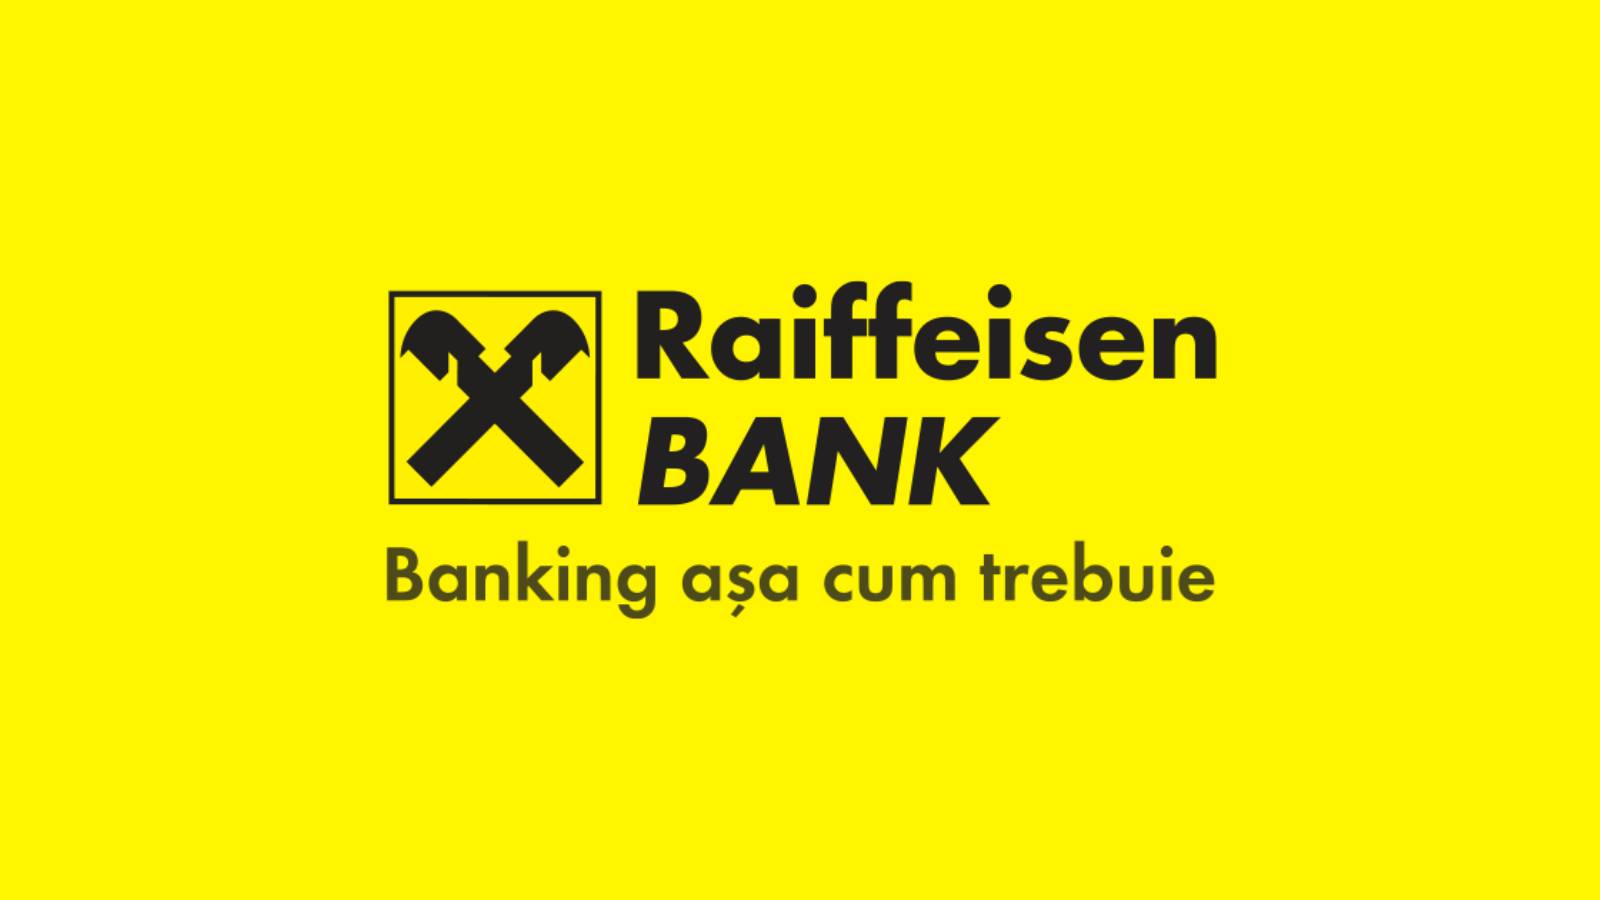 Raiffeisen Bank beach